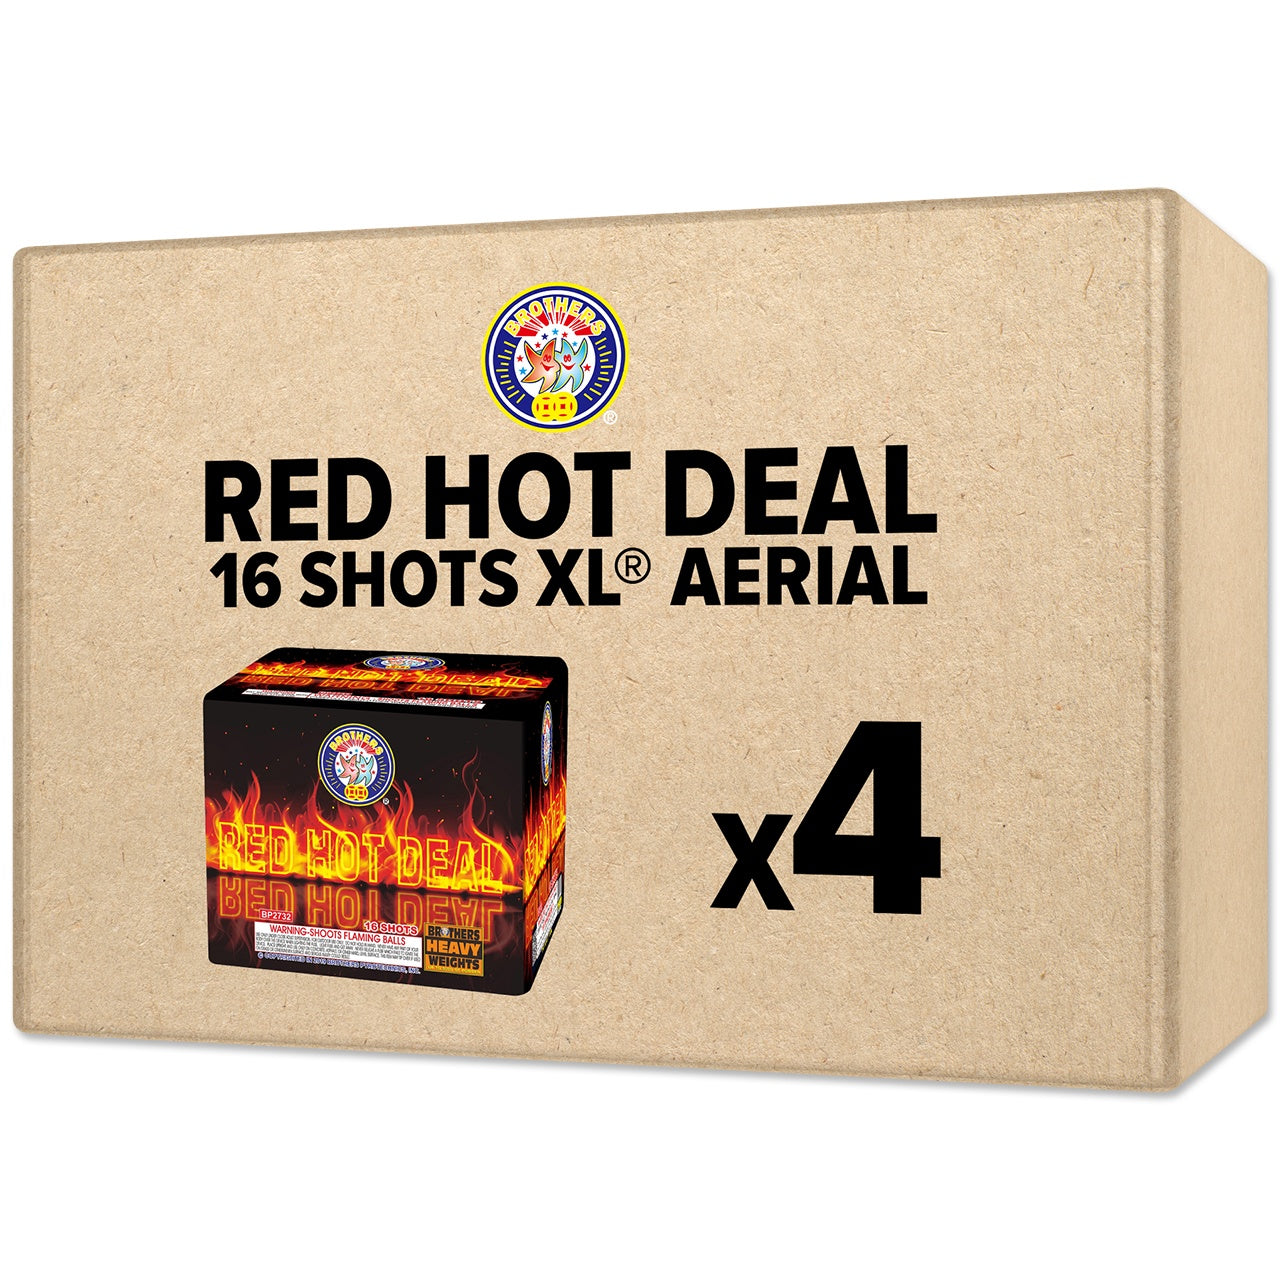 Red Hot Deal 16 Shots XL Aerial